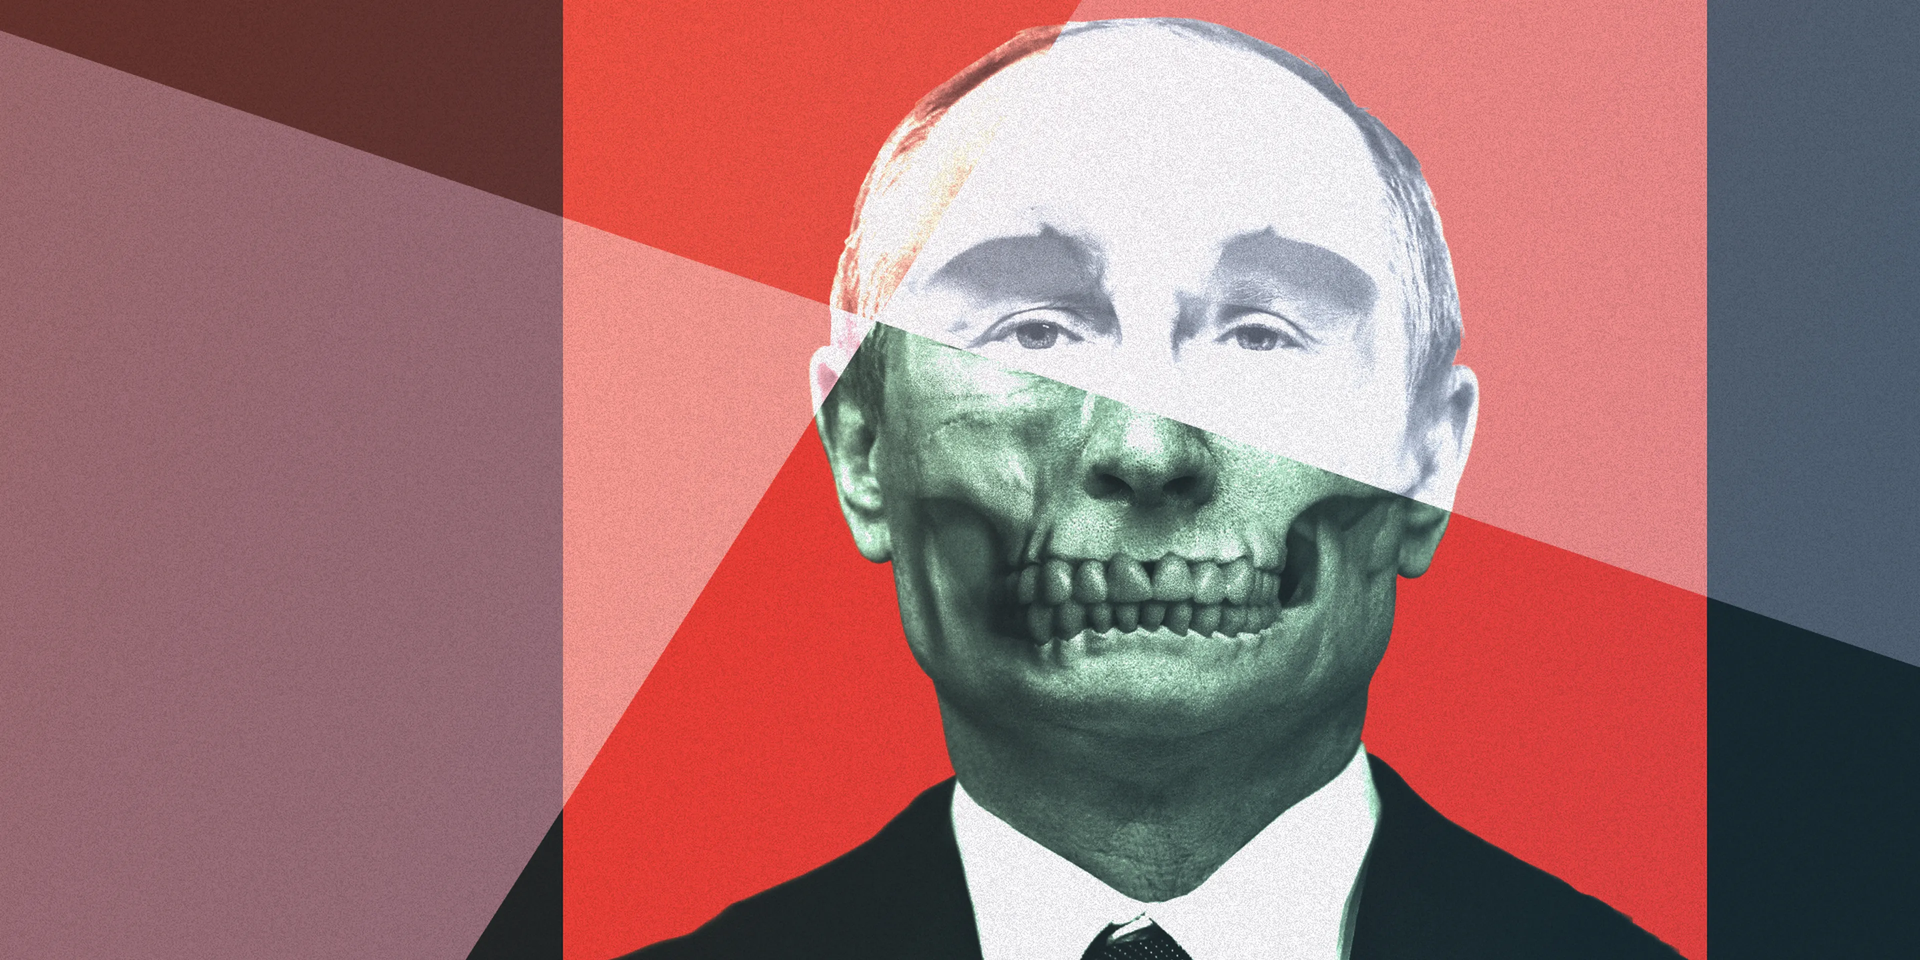 What Is Inside Vladimir Putin’s Head?